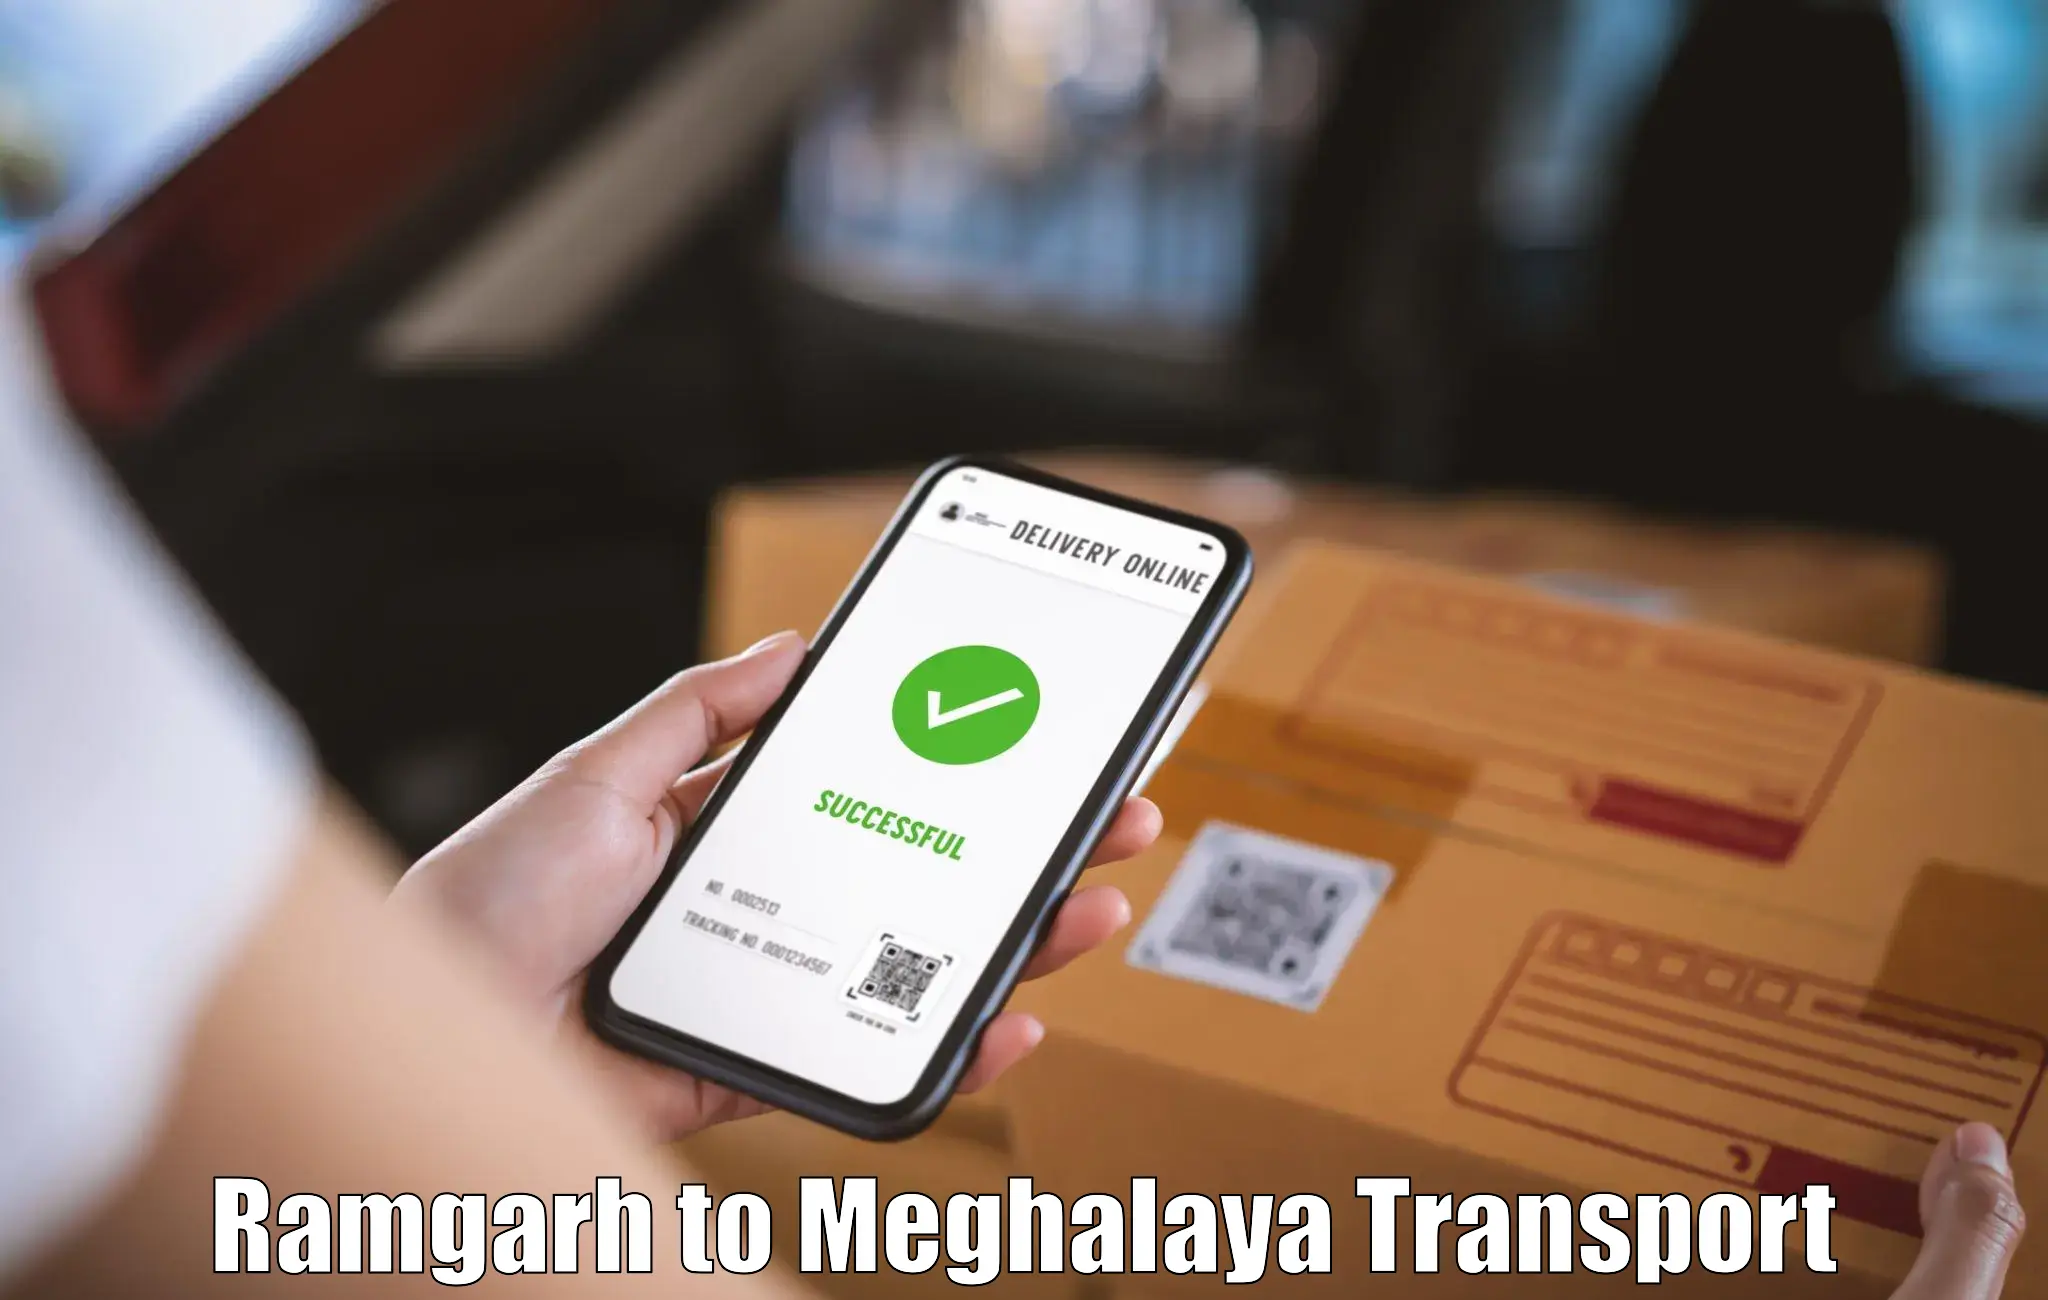 Online transport service Ramgarh to Meghalaya